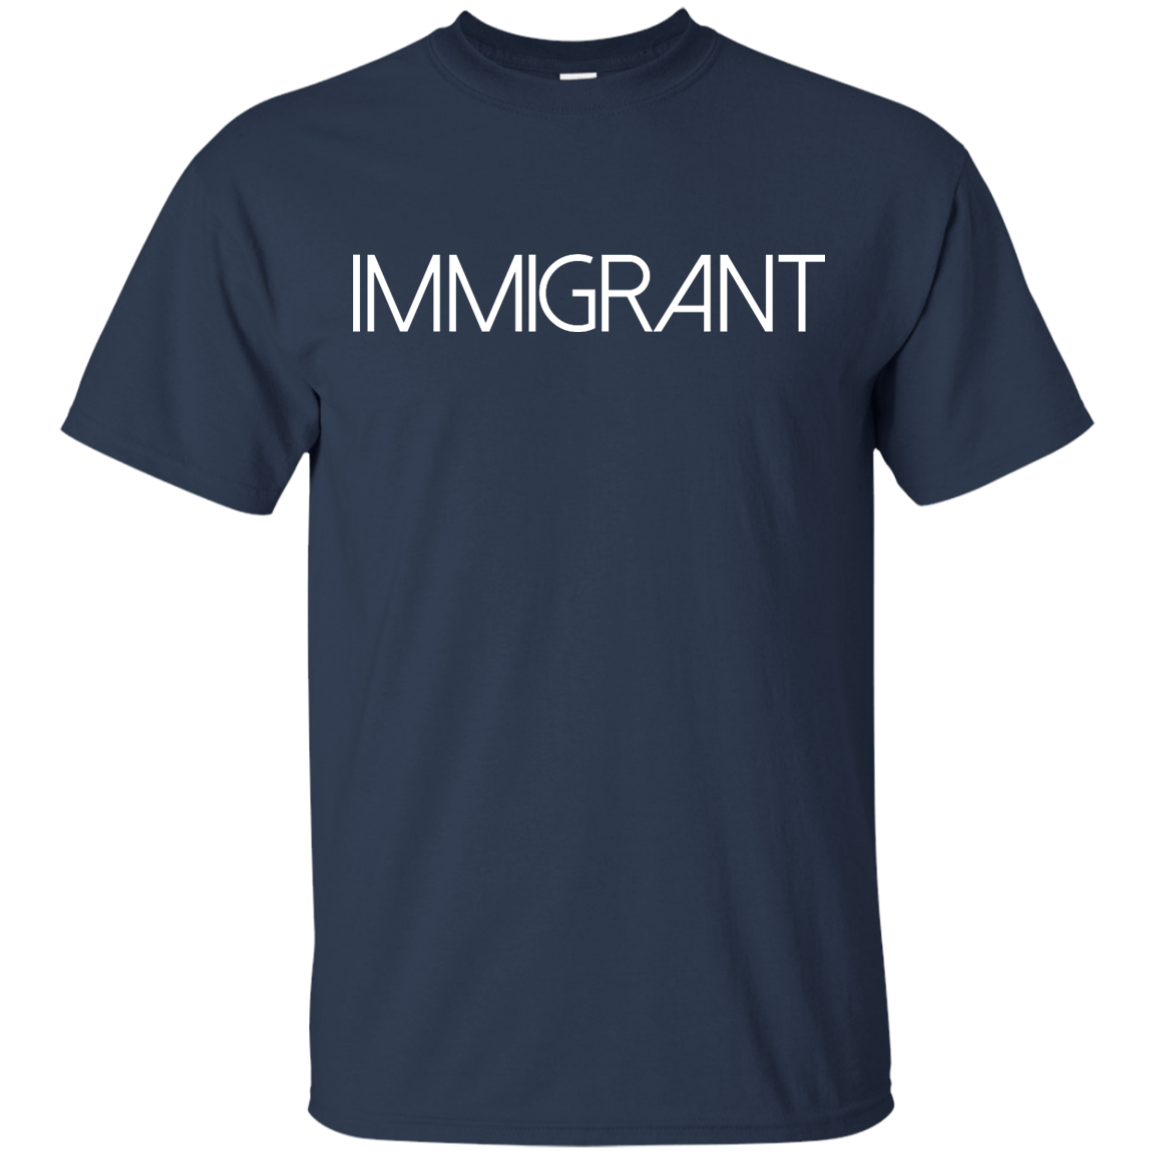 Immigrant shirt, sweatshirt, racerback